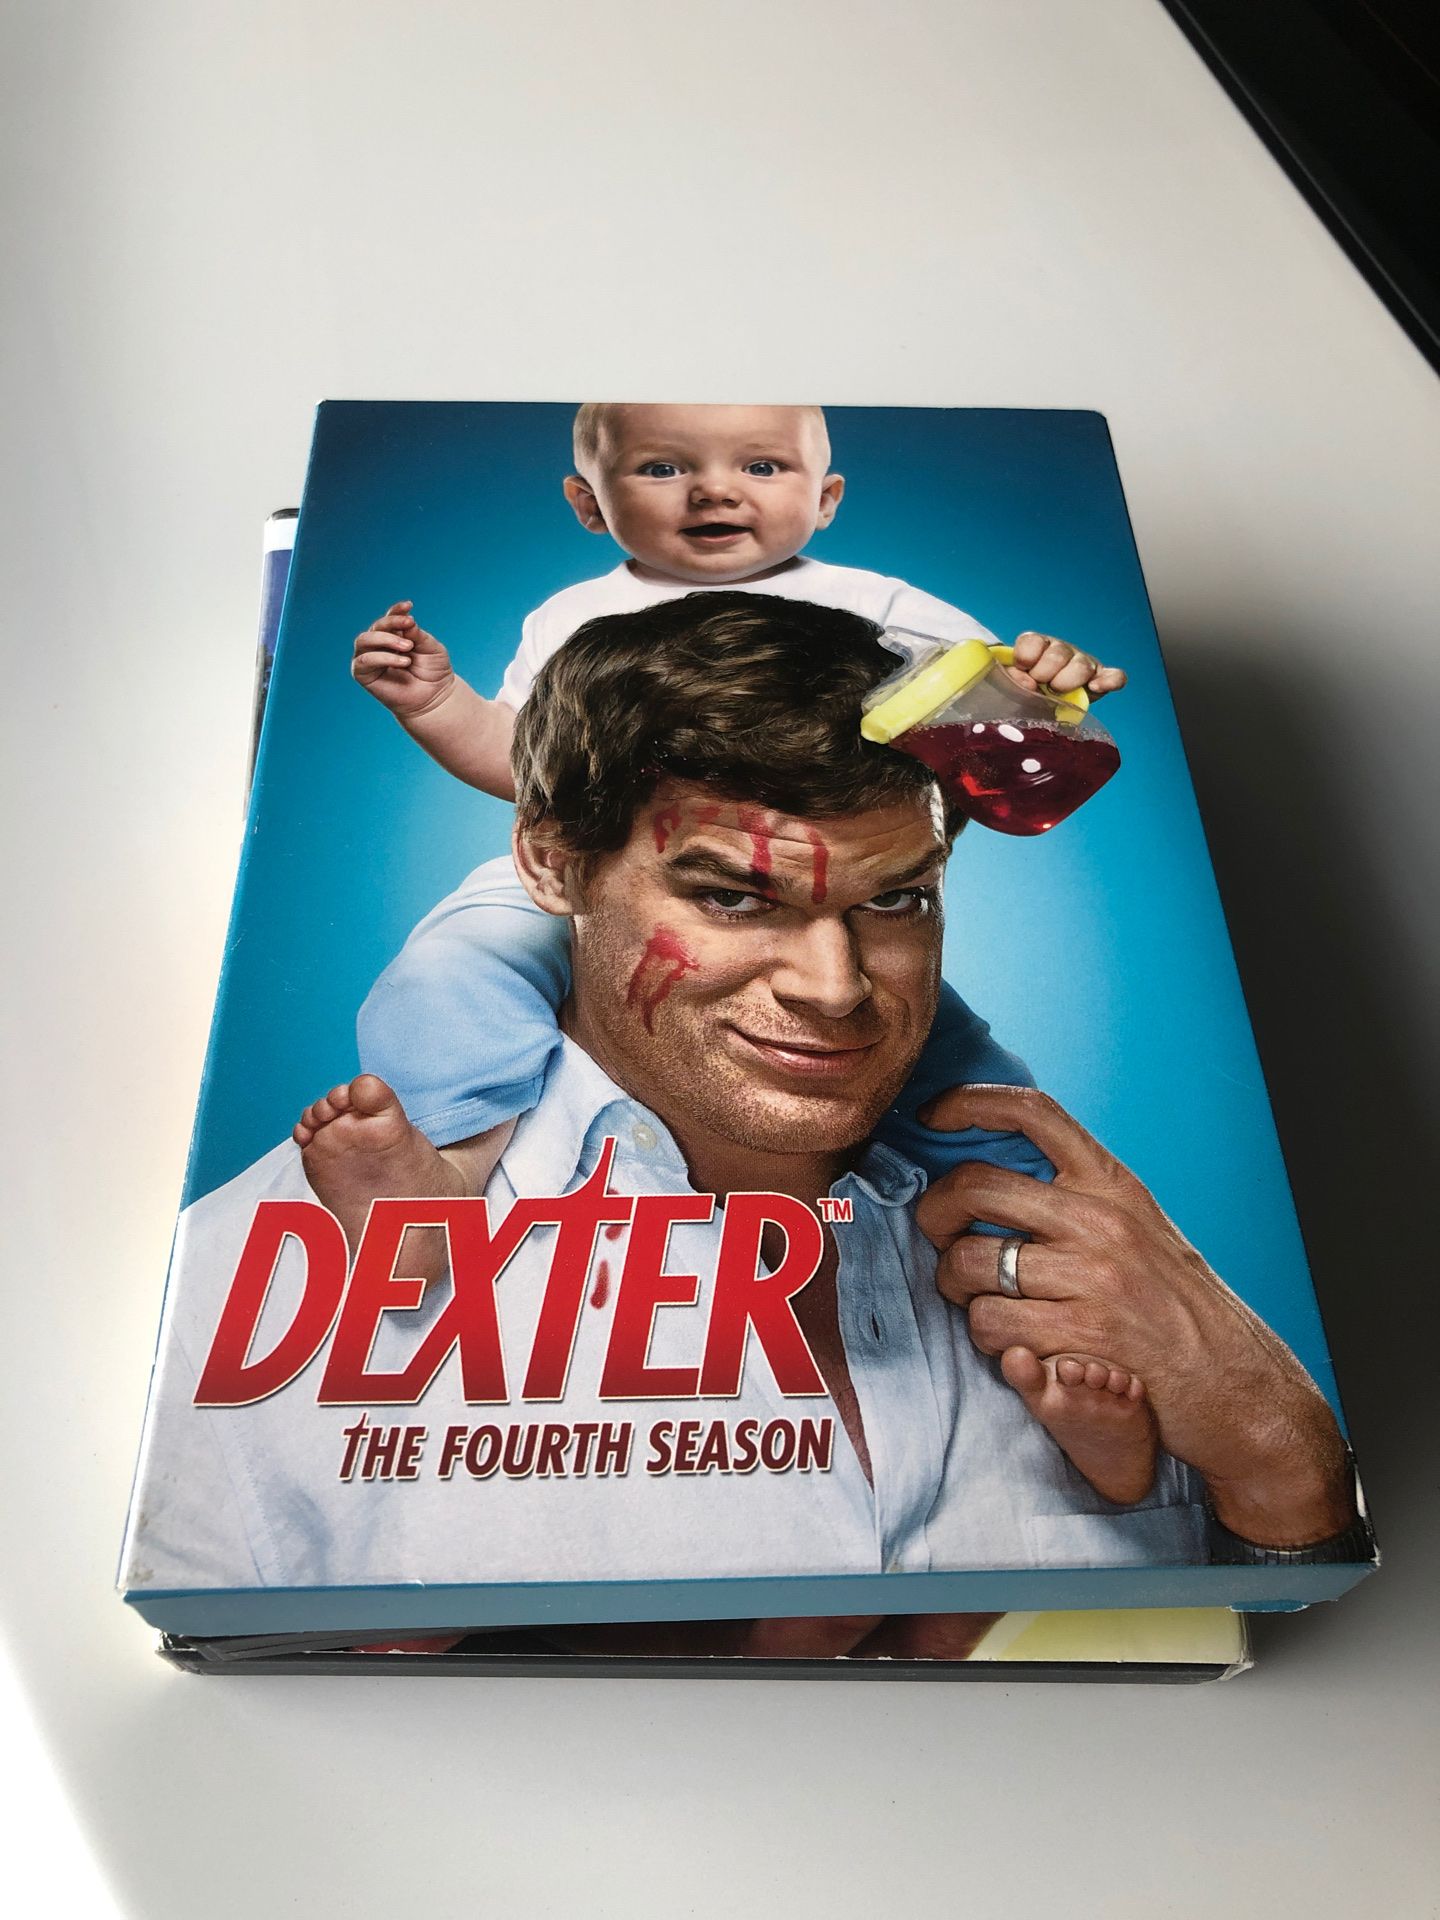 Dexter season 4 dvd